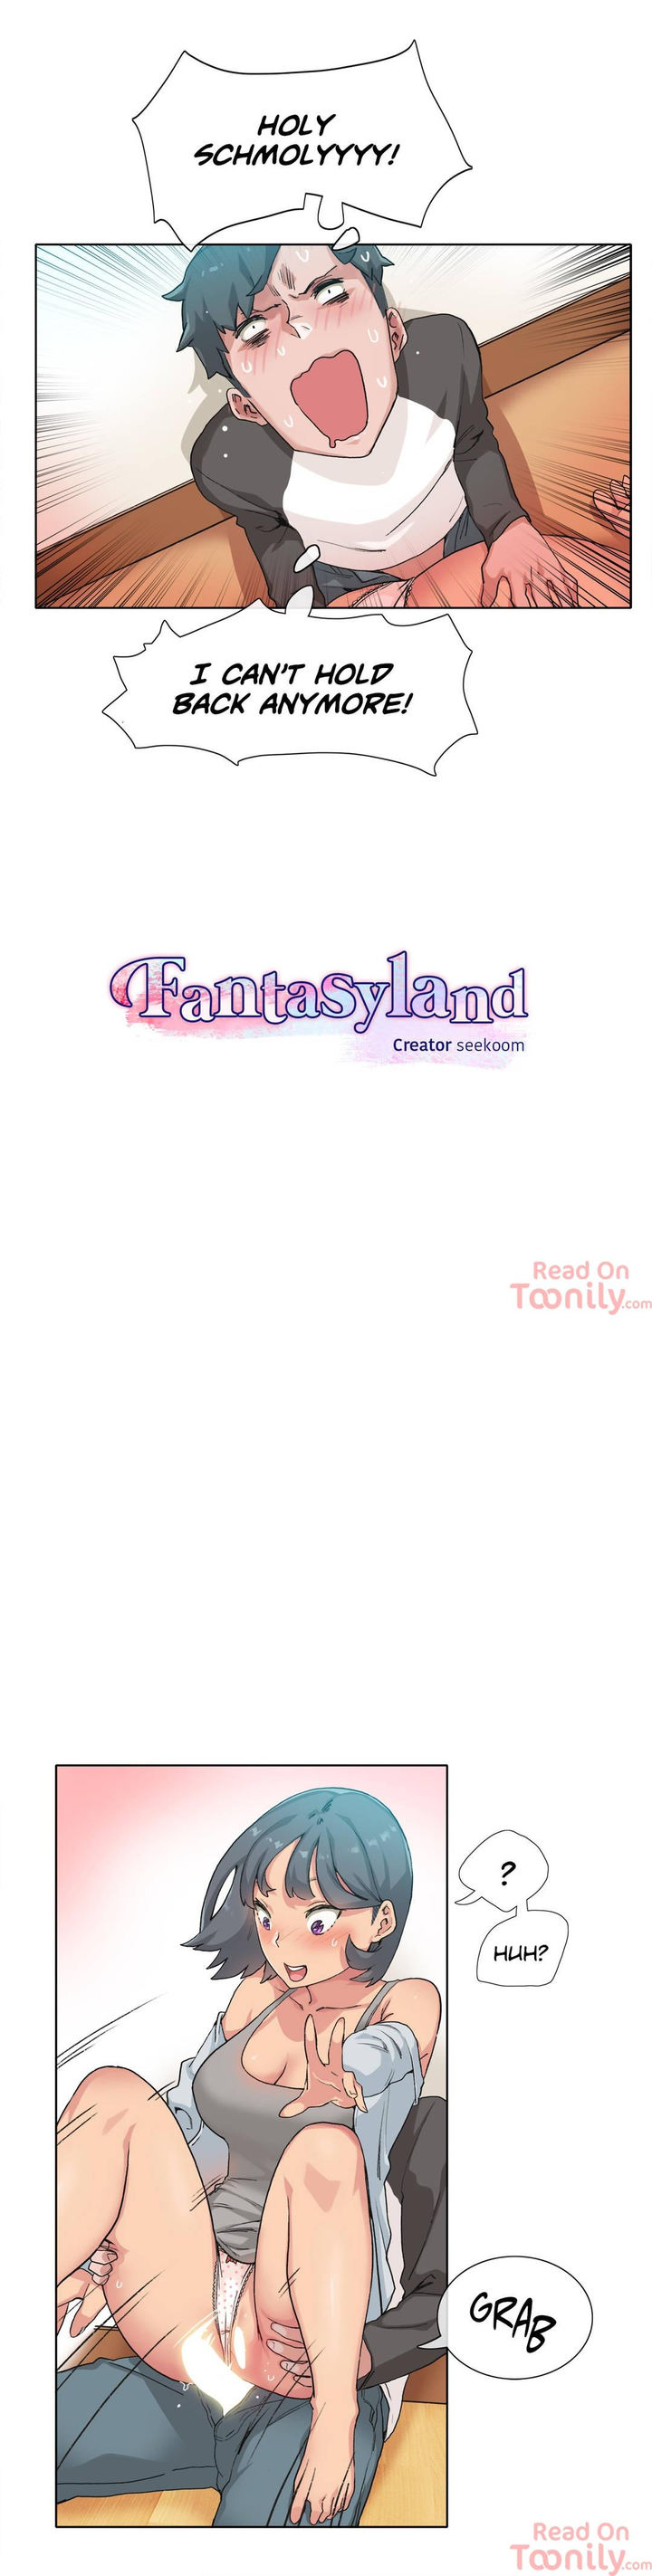 Fantasyland - Chapter 12 Page 1